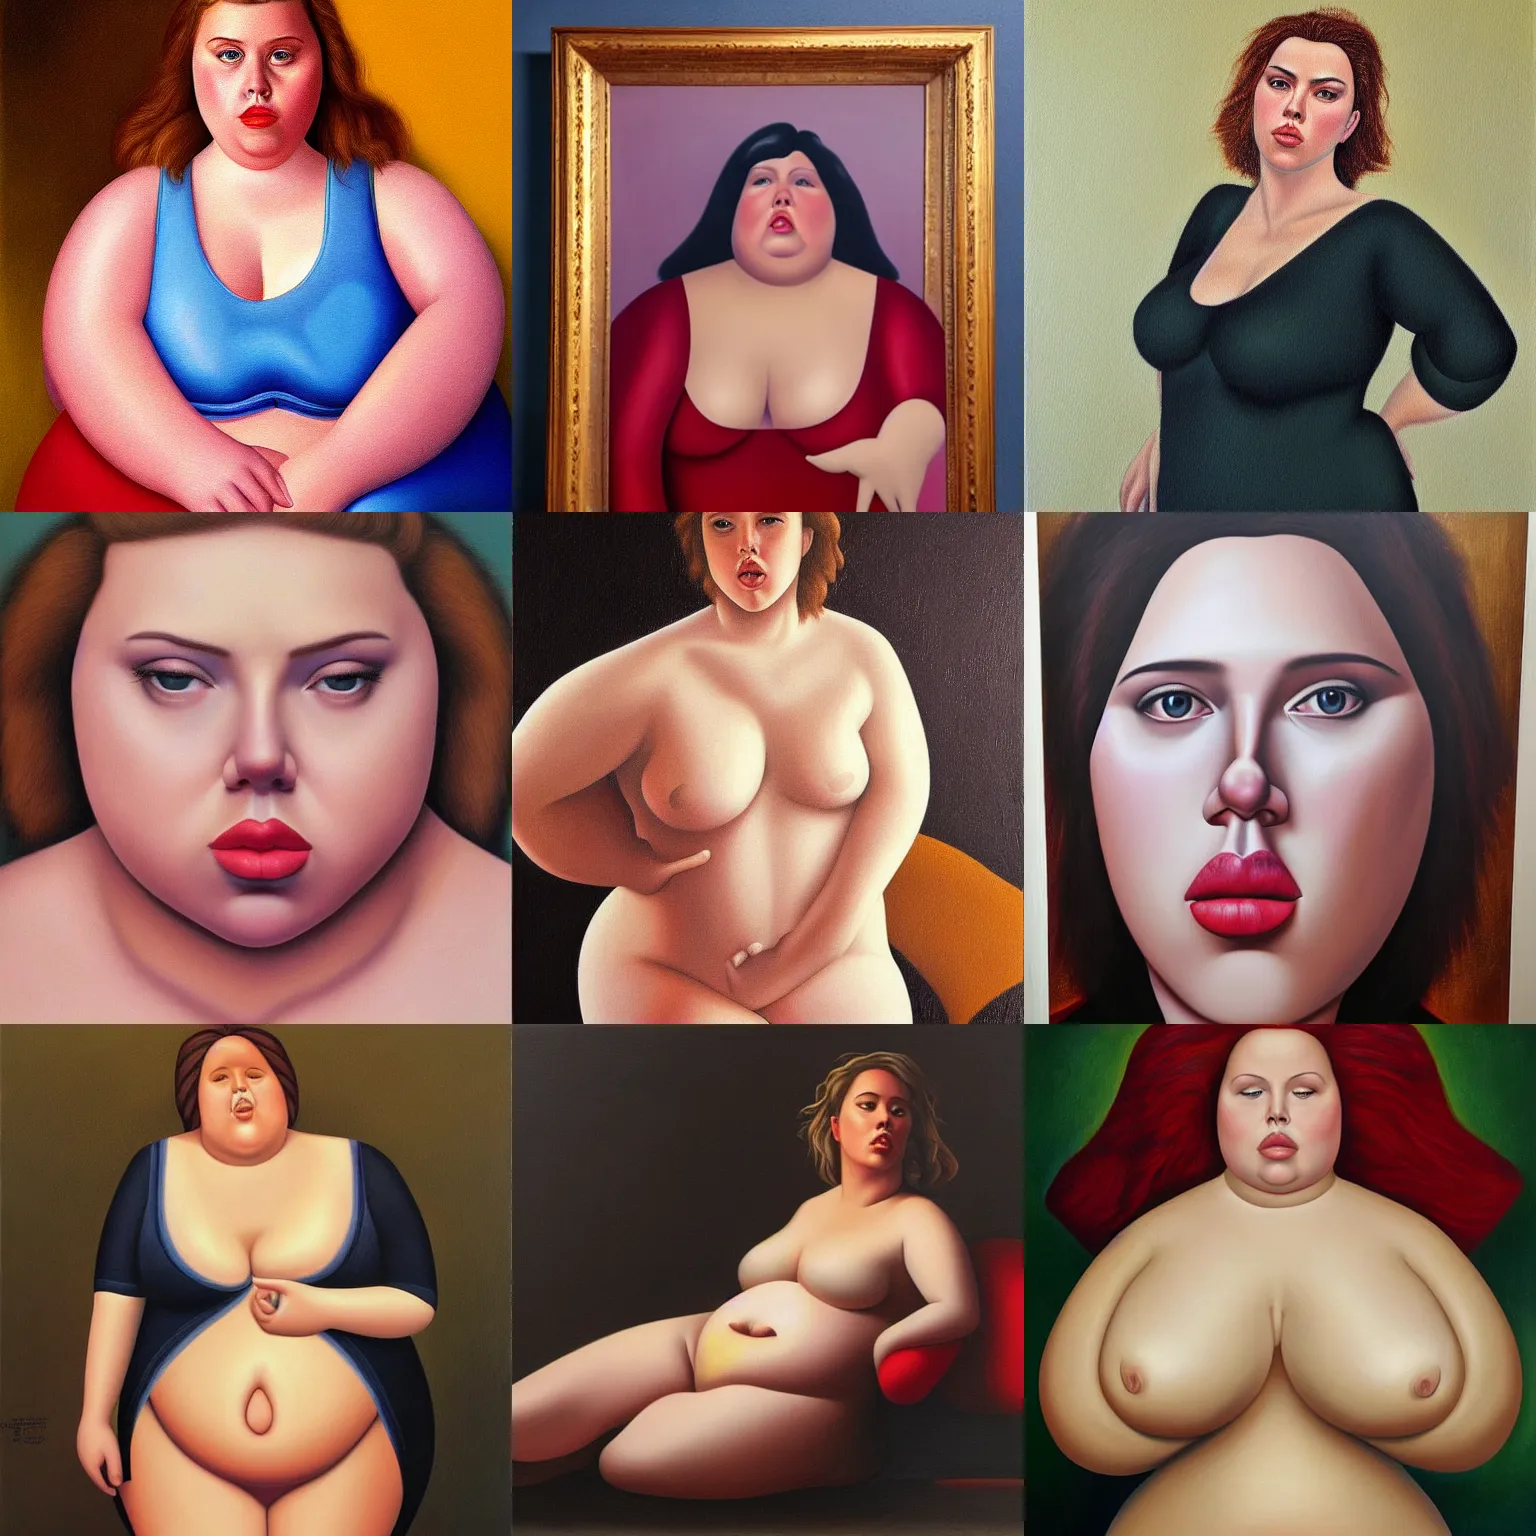 Prompt: obese scarlett johansson, oil painting, by fernando botero